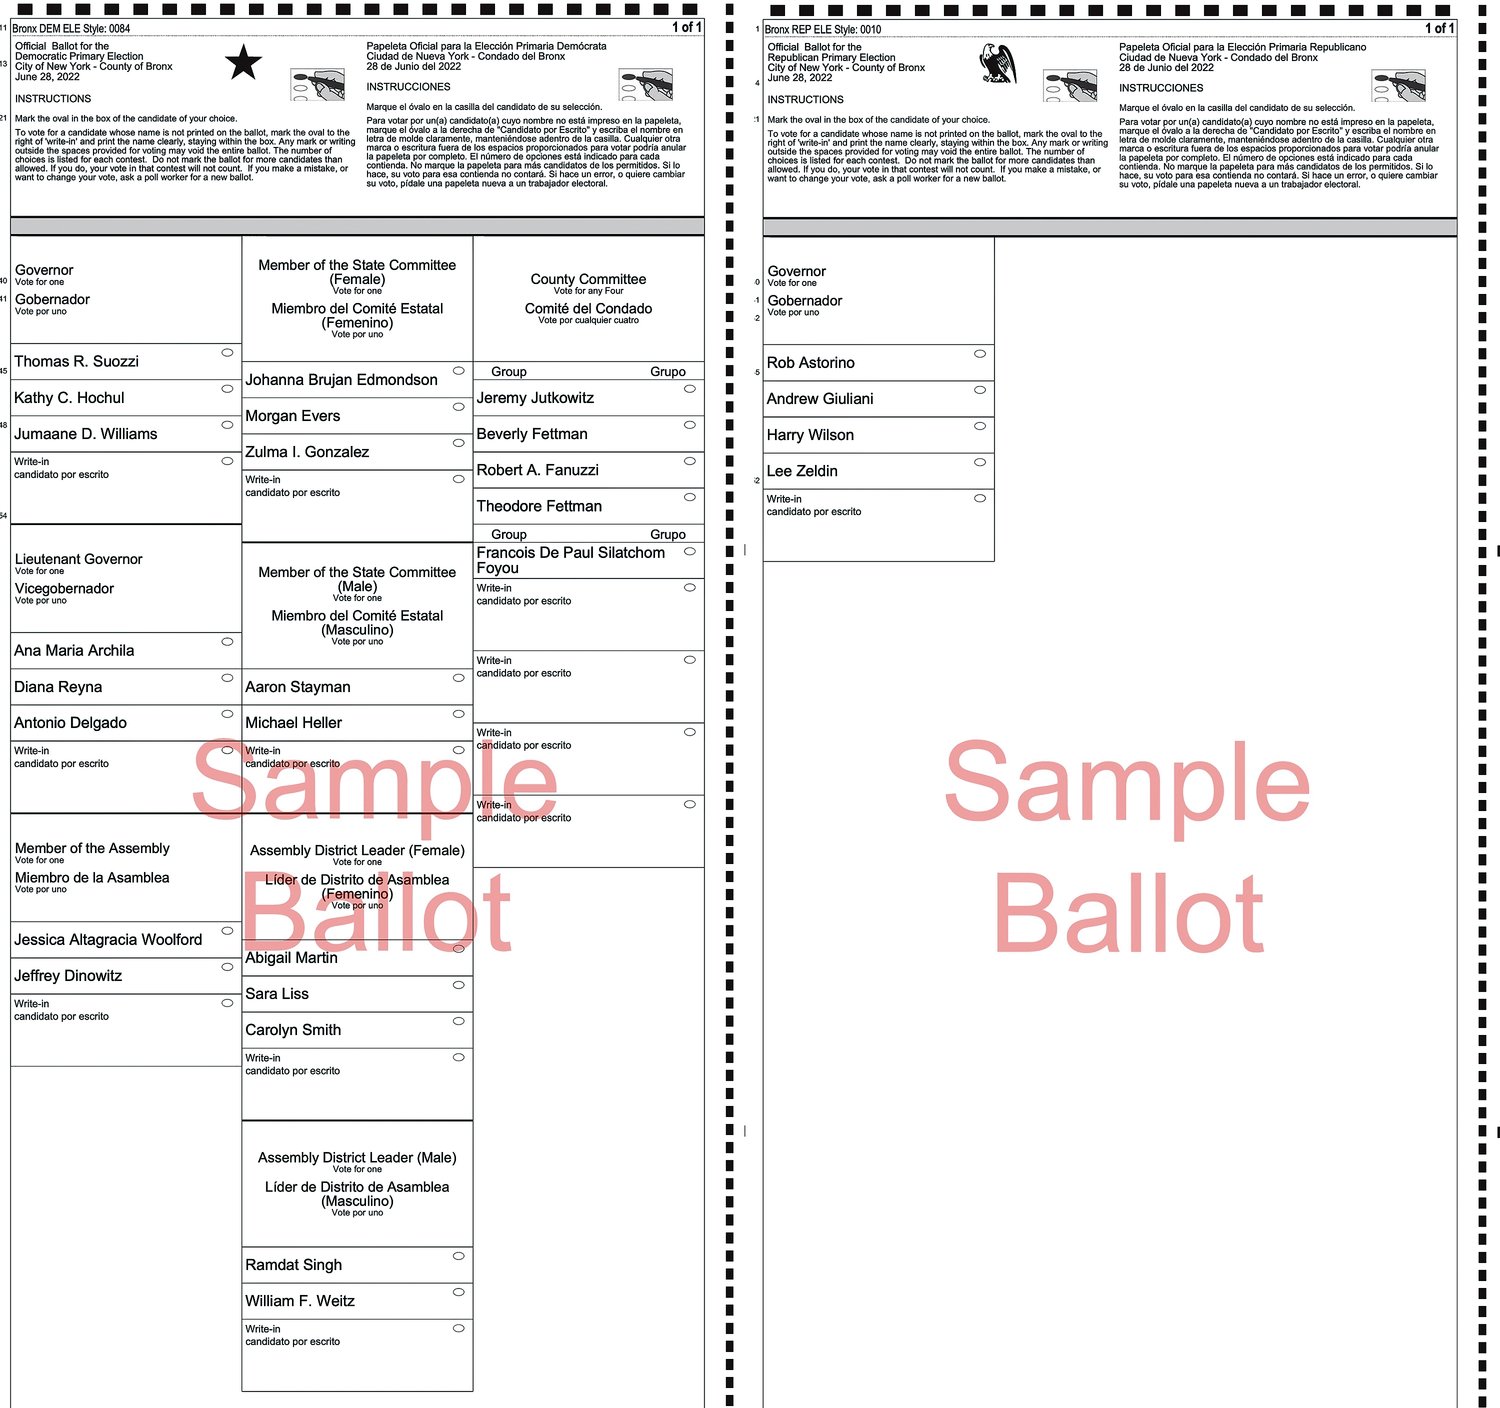 A sample ballot for the June 28, 2022 Democratic Primary, left. A sample ballot for the 2022 Republican Primary, right.